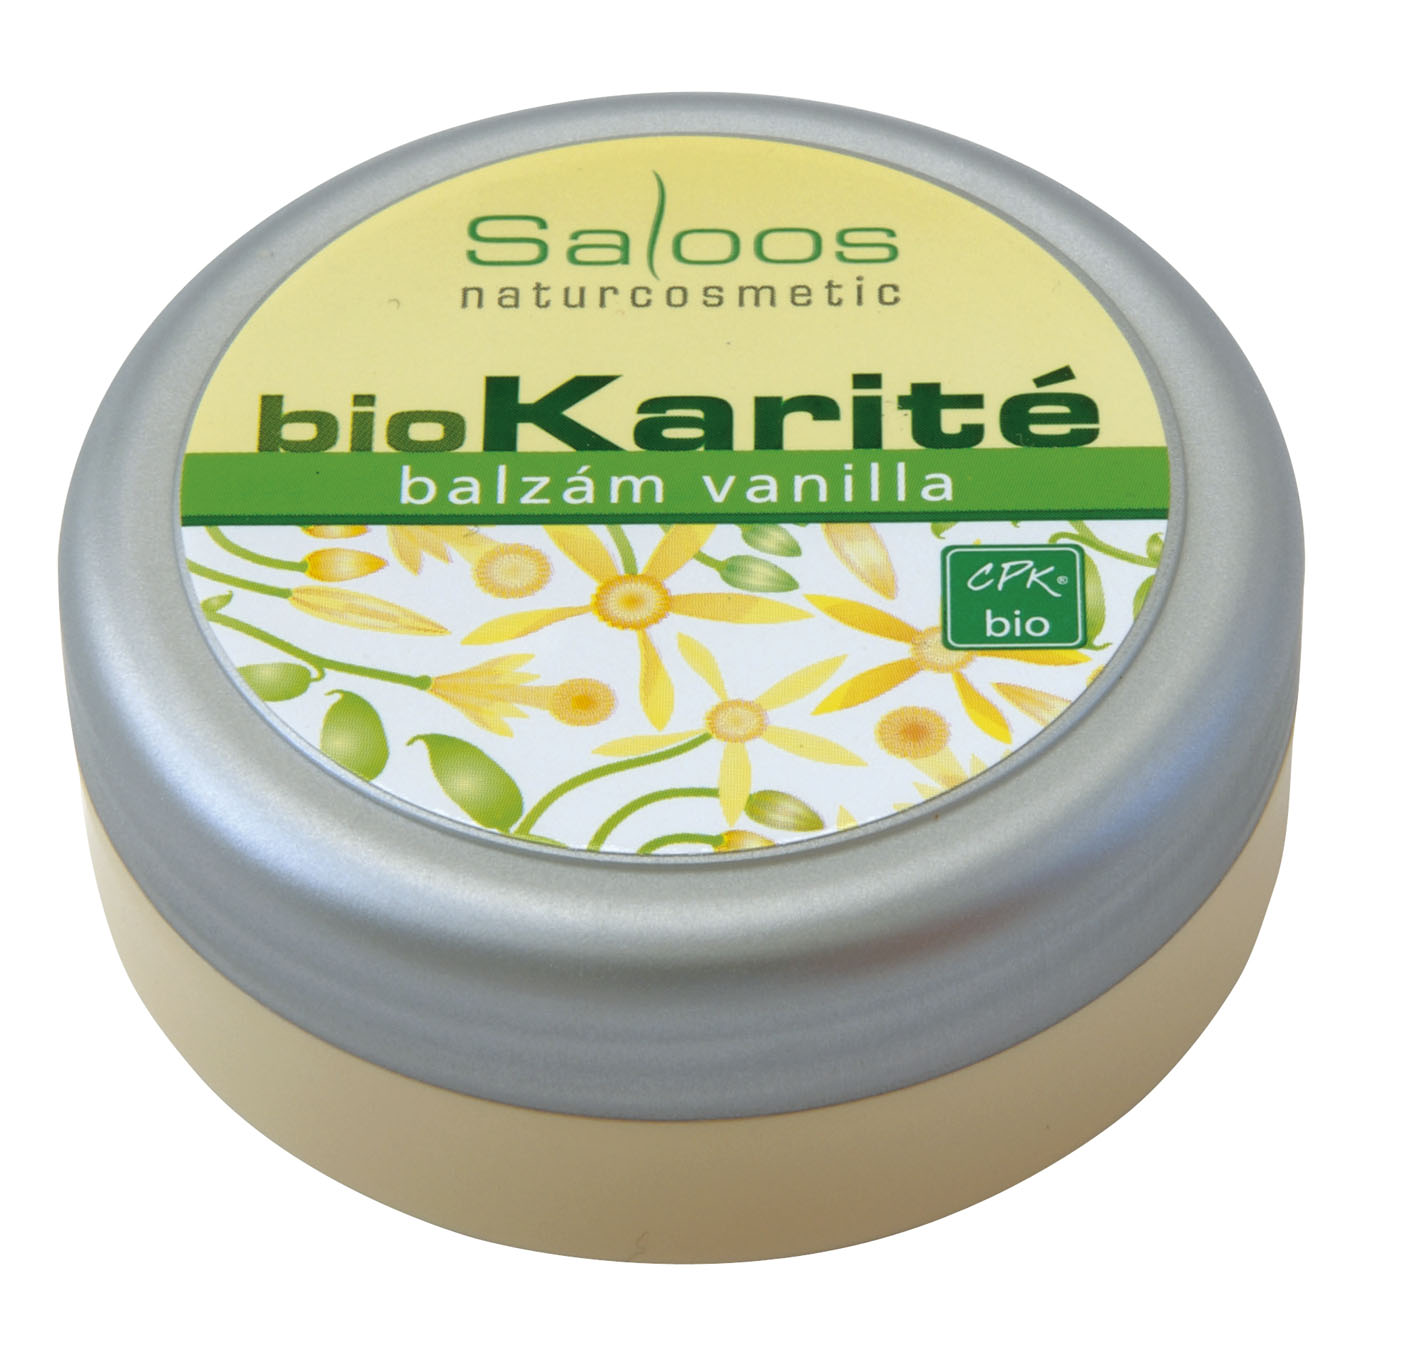 Bio Karité Vanilla balzám 50 ml - Saloos